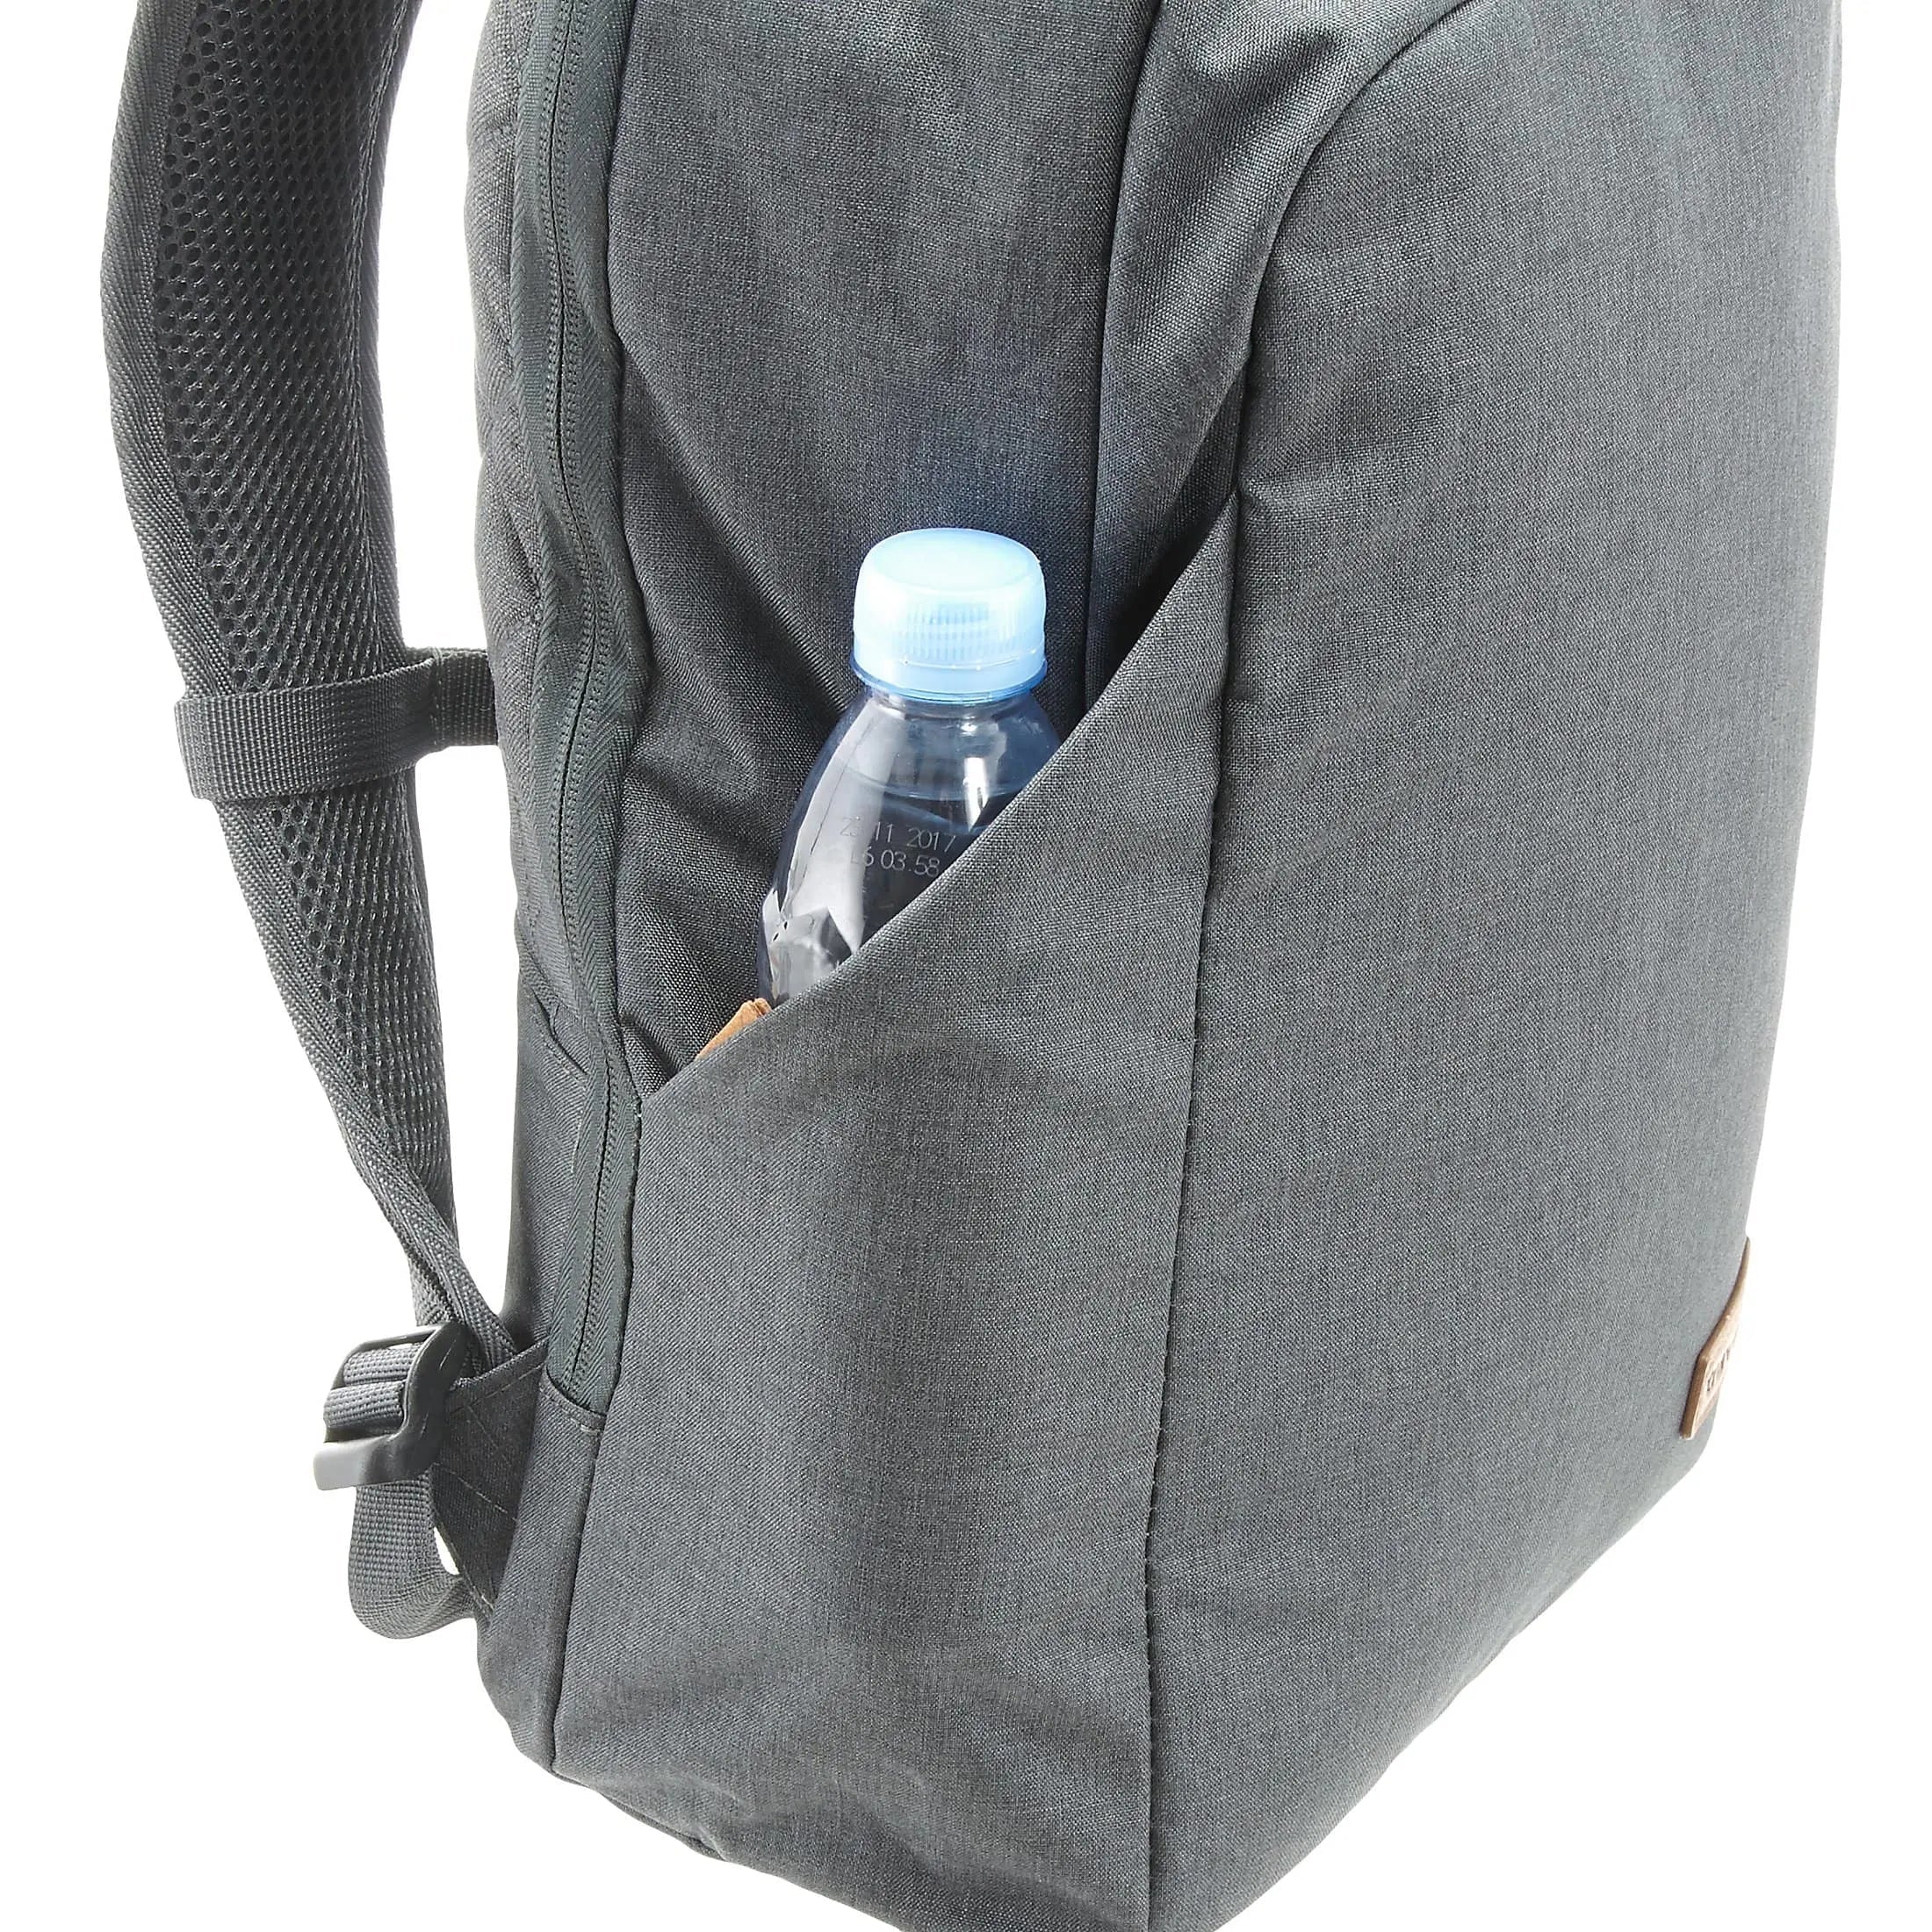 Travelite Basics Safety Rucksack 46 cm - anthrazit